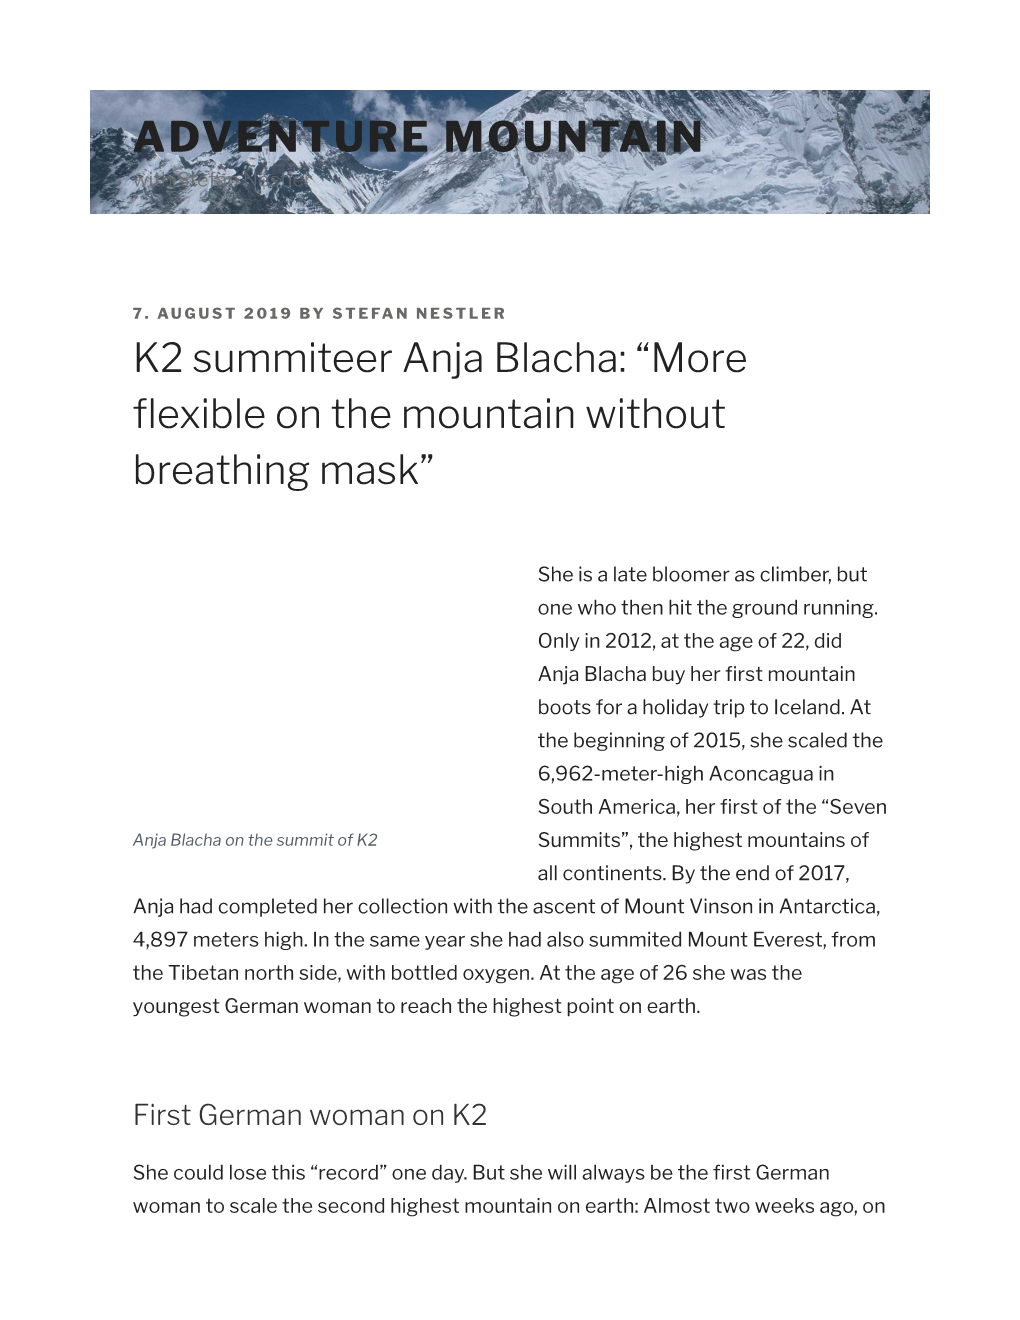 K2 Summiteer Anja Blacha: "More Flexible on the Mountain Withou